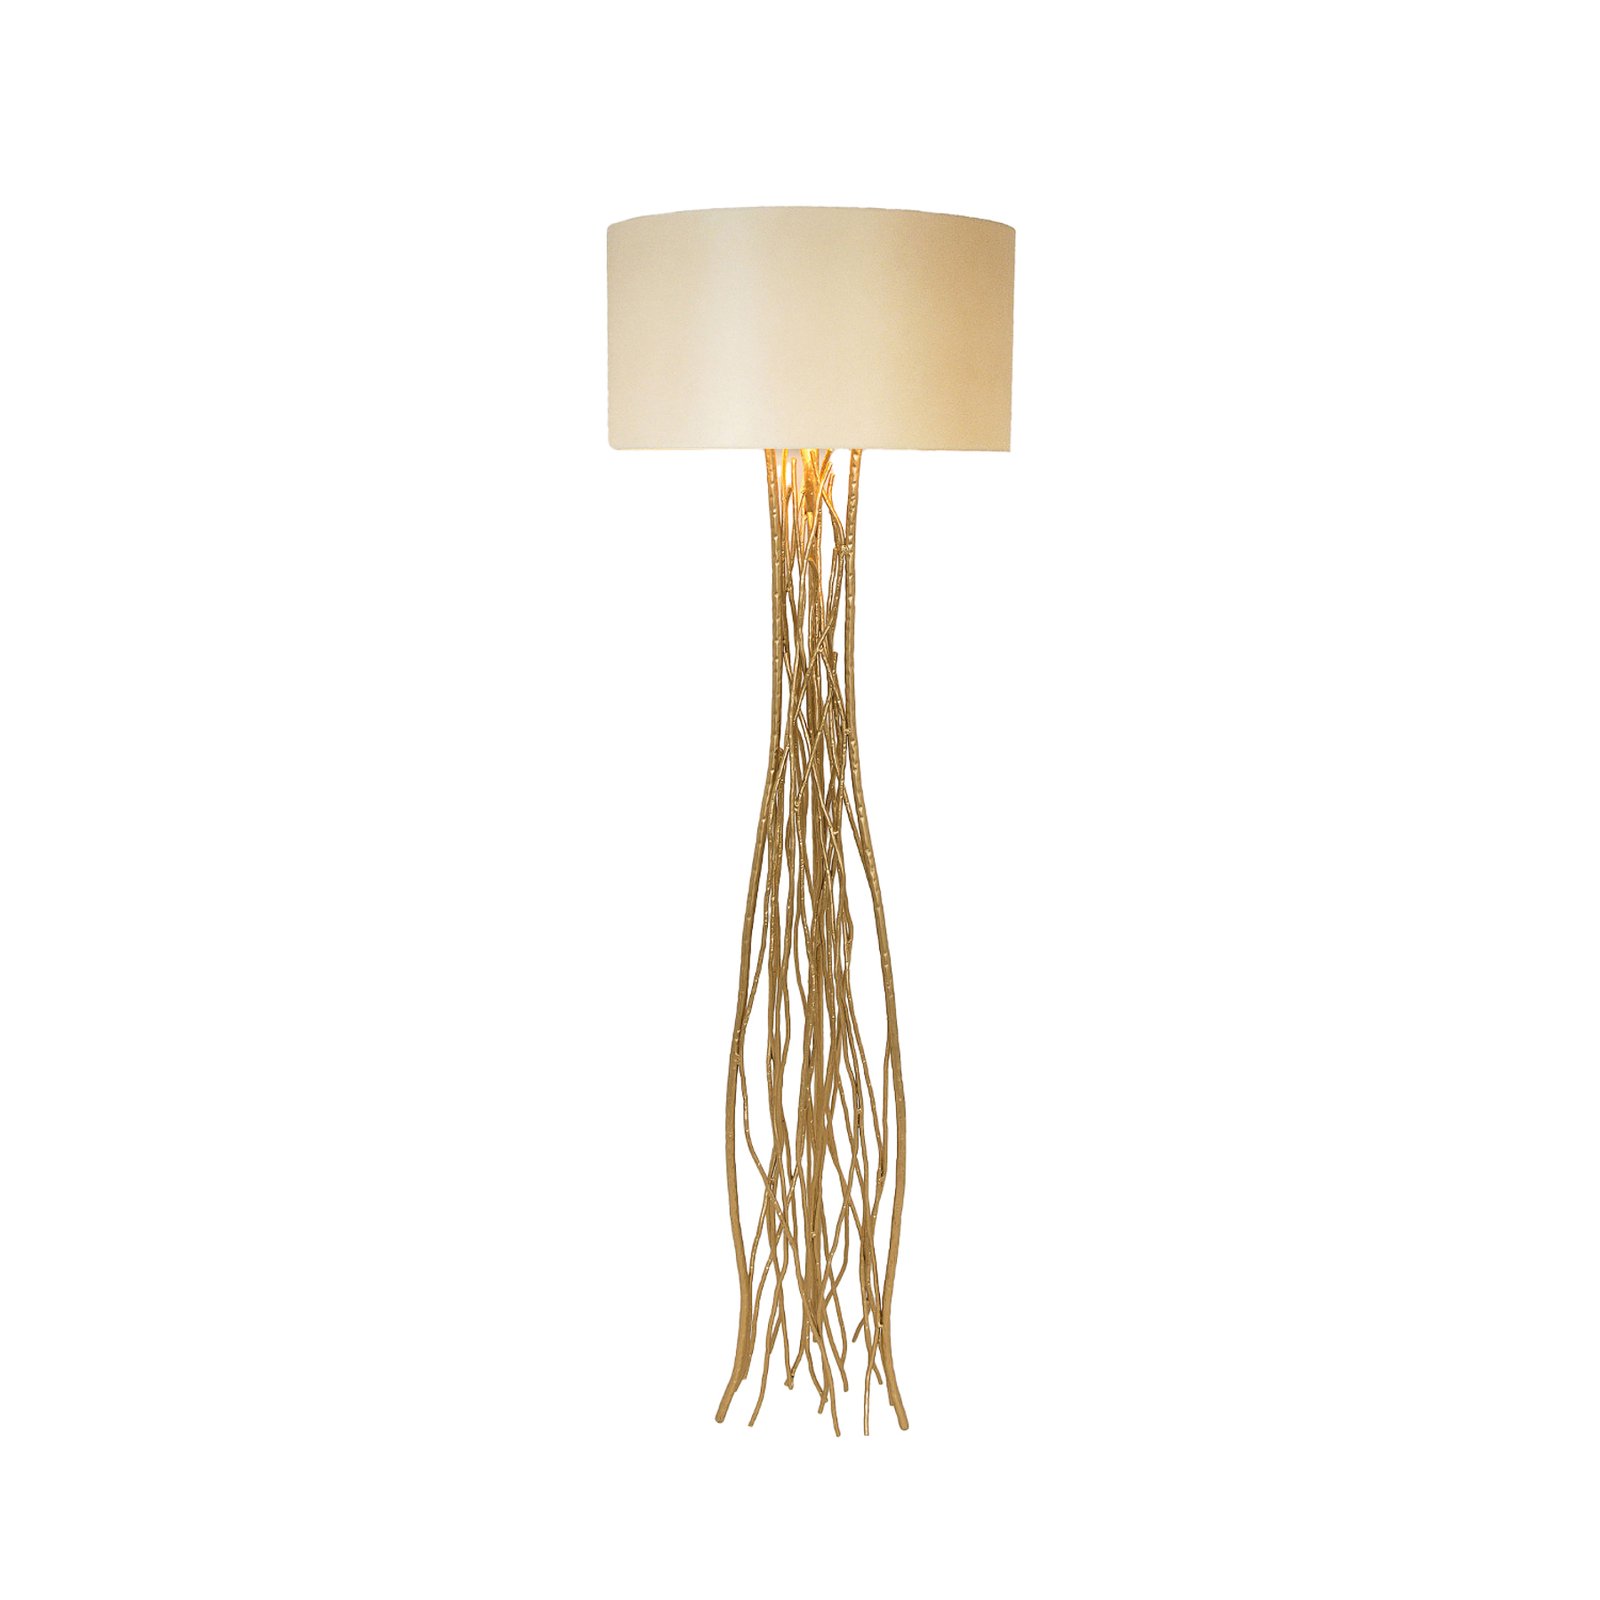 Stojací lampa Capri, zlatá/ecru, výška 155 cm, kované železo